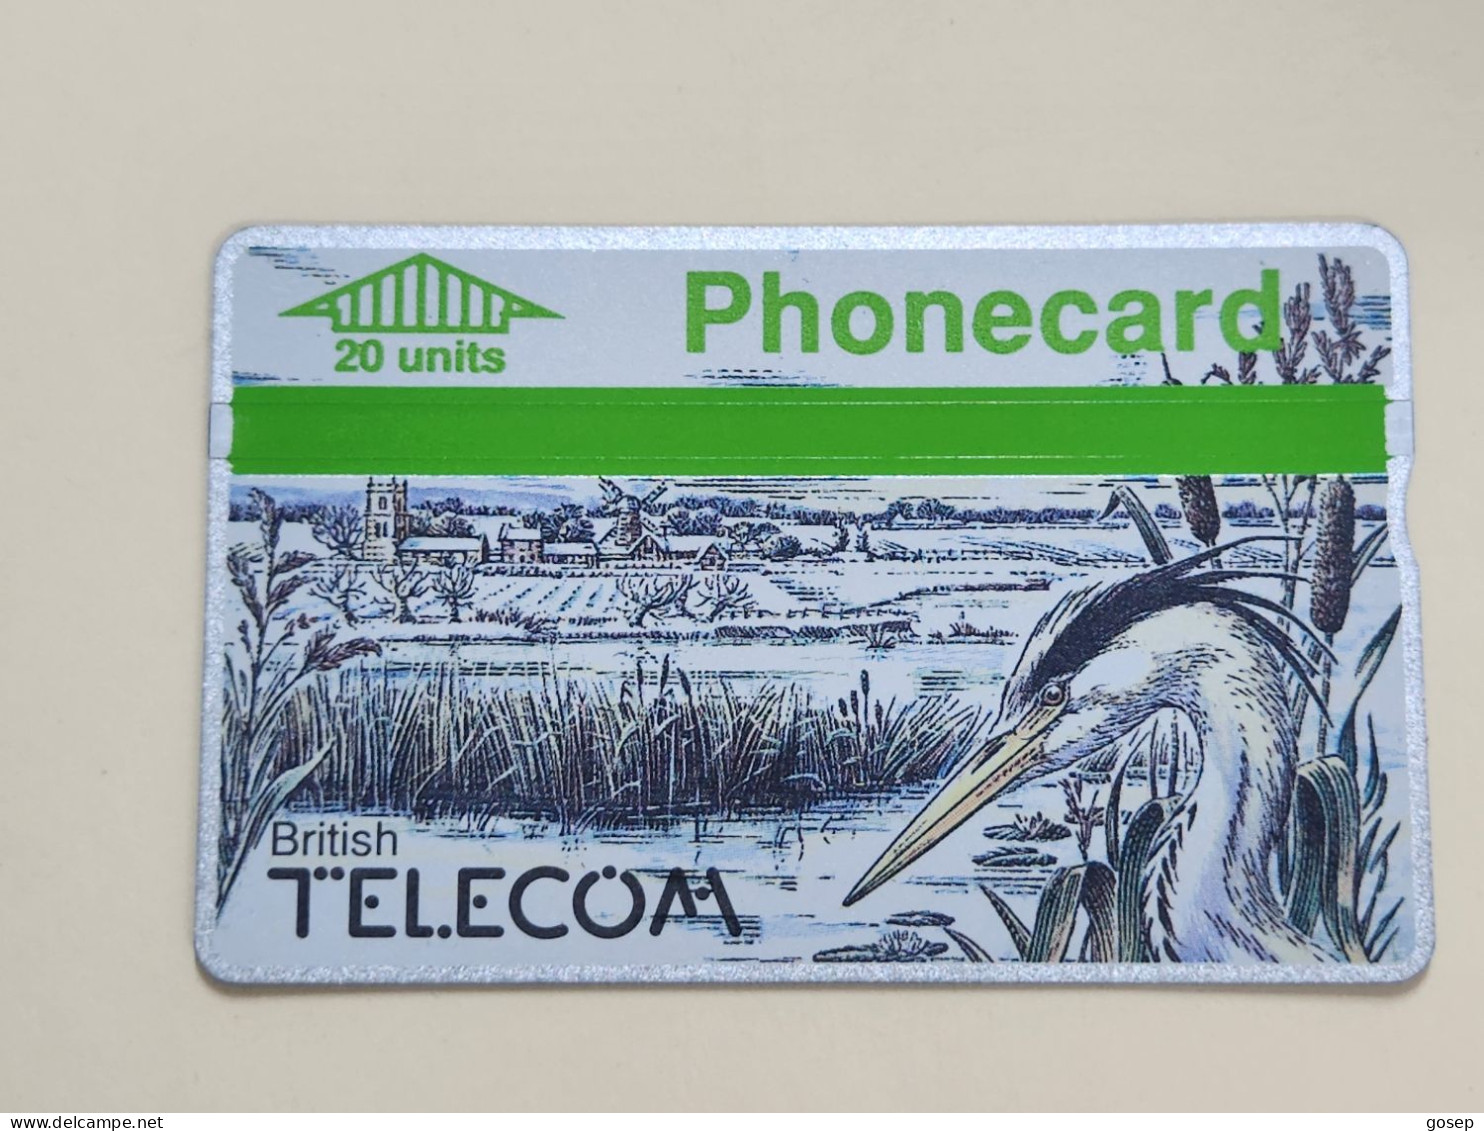 United Kingdom-(BTC011)-WINTER 1989-Heron-(283)(20units)(908F00119)price Cataloge 6.00£ Mint+1card Prepiad Free - BT Edición Conmemorativa